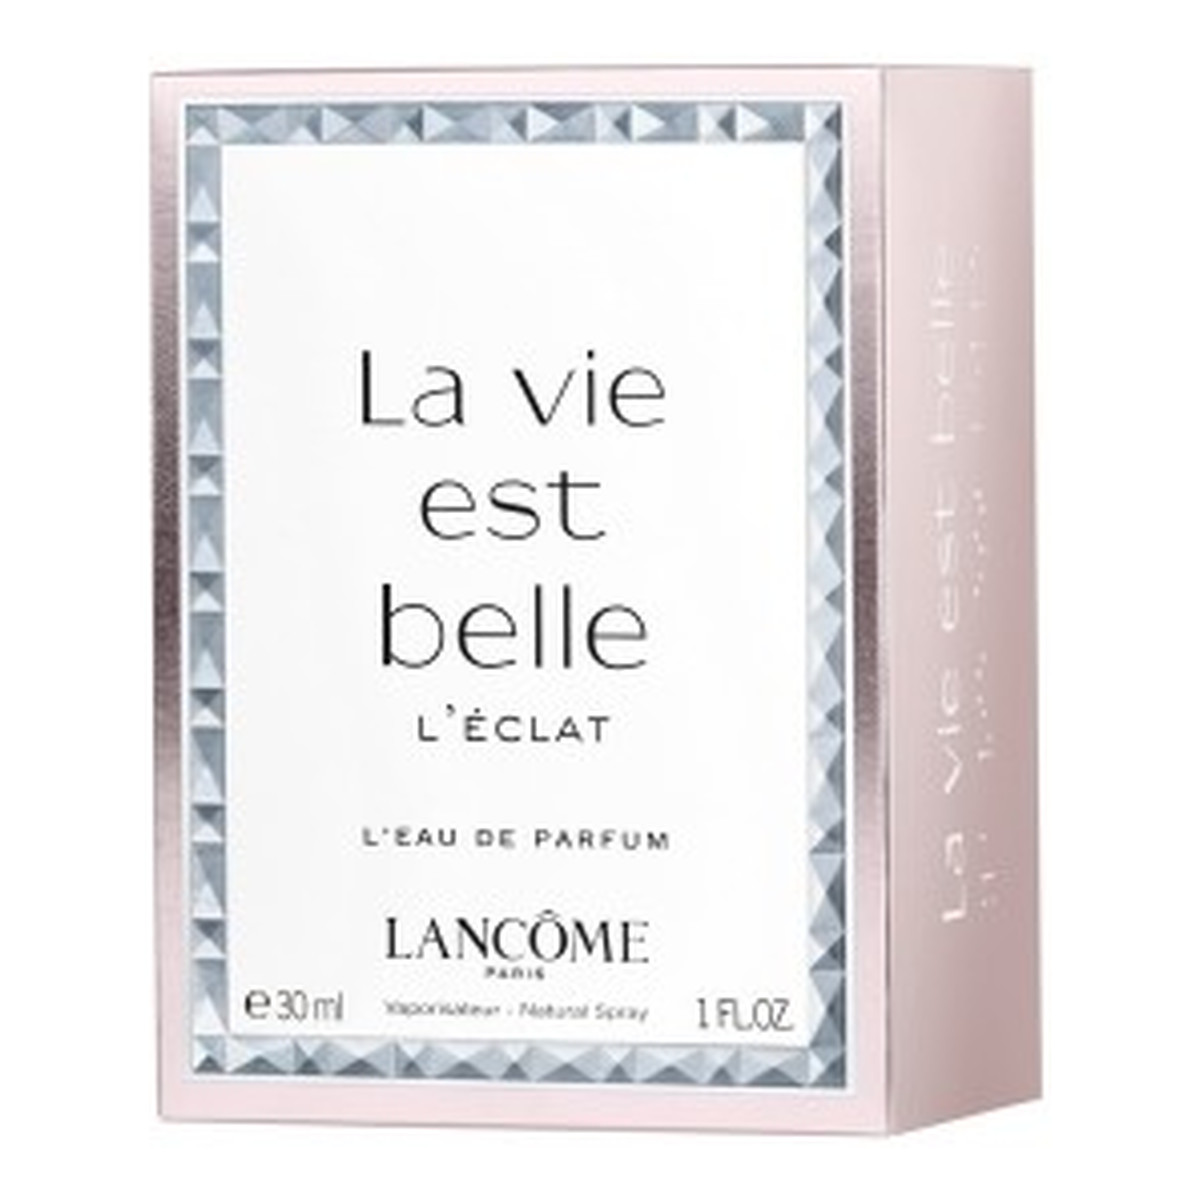 Lancome La Vie Est Belle L'Eclat woda perfumowana 30ml